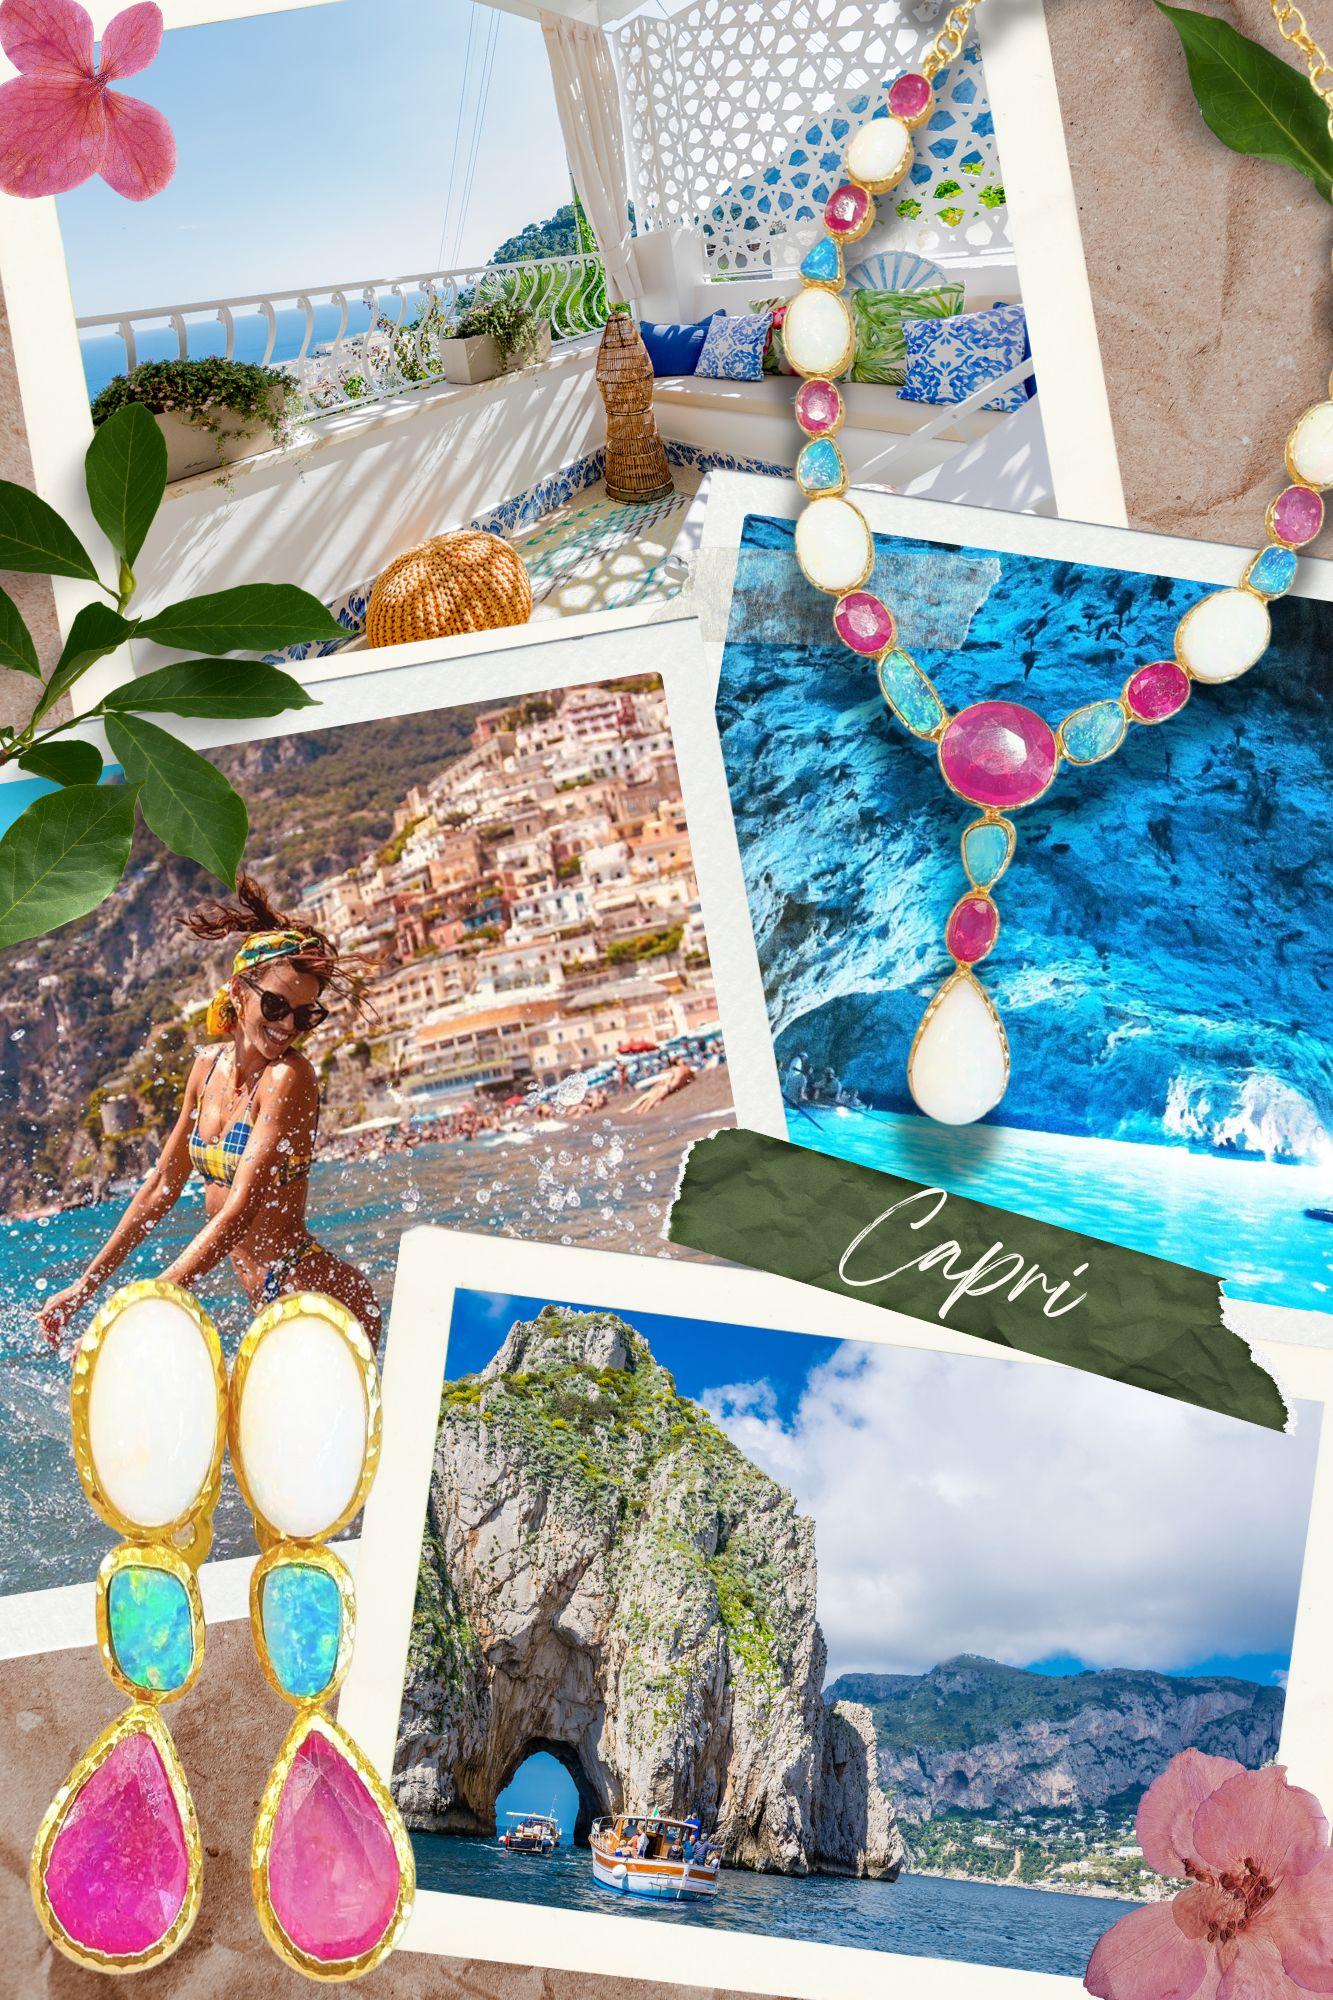 Bochic “Capri” Lilac Calcedony & Sapphire Ring Set in 18K Gold & Silver  For Sale 1